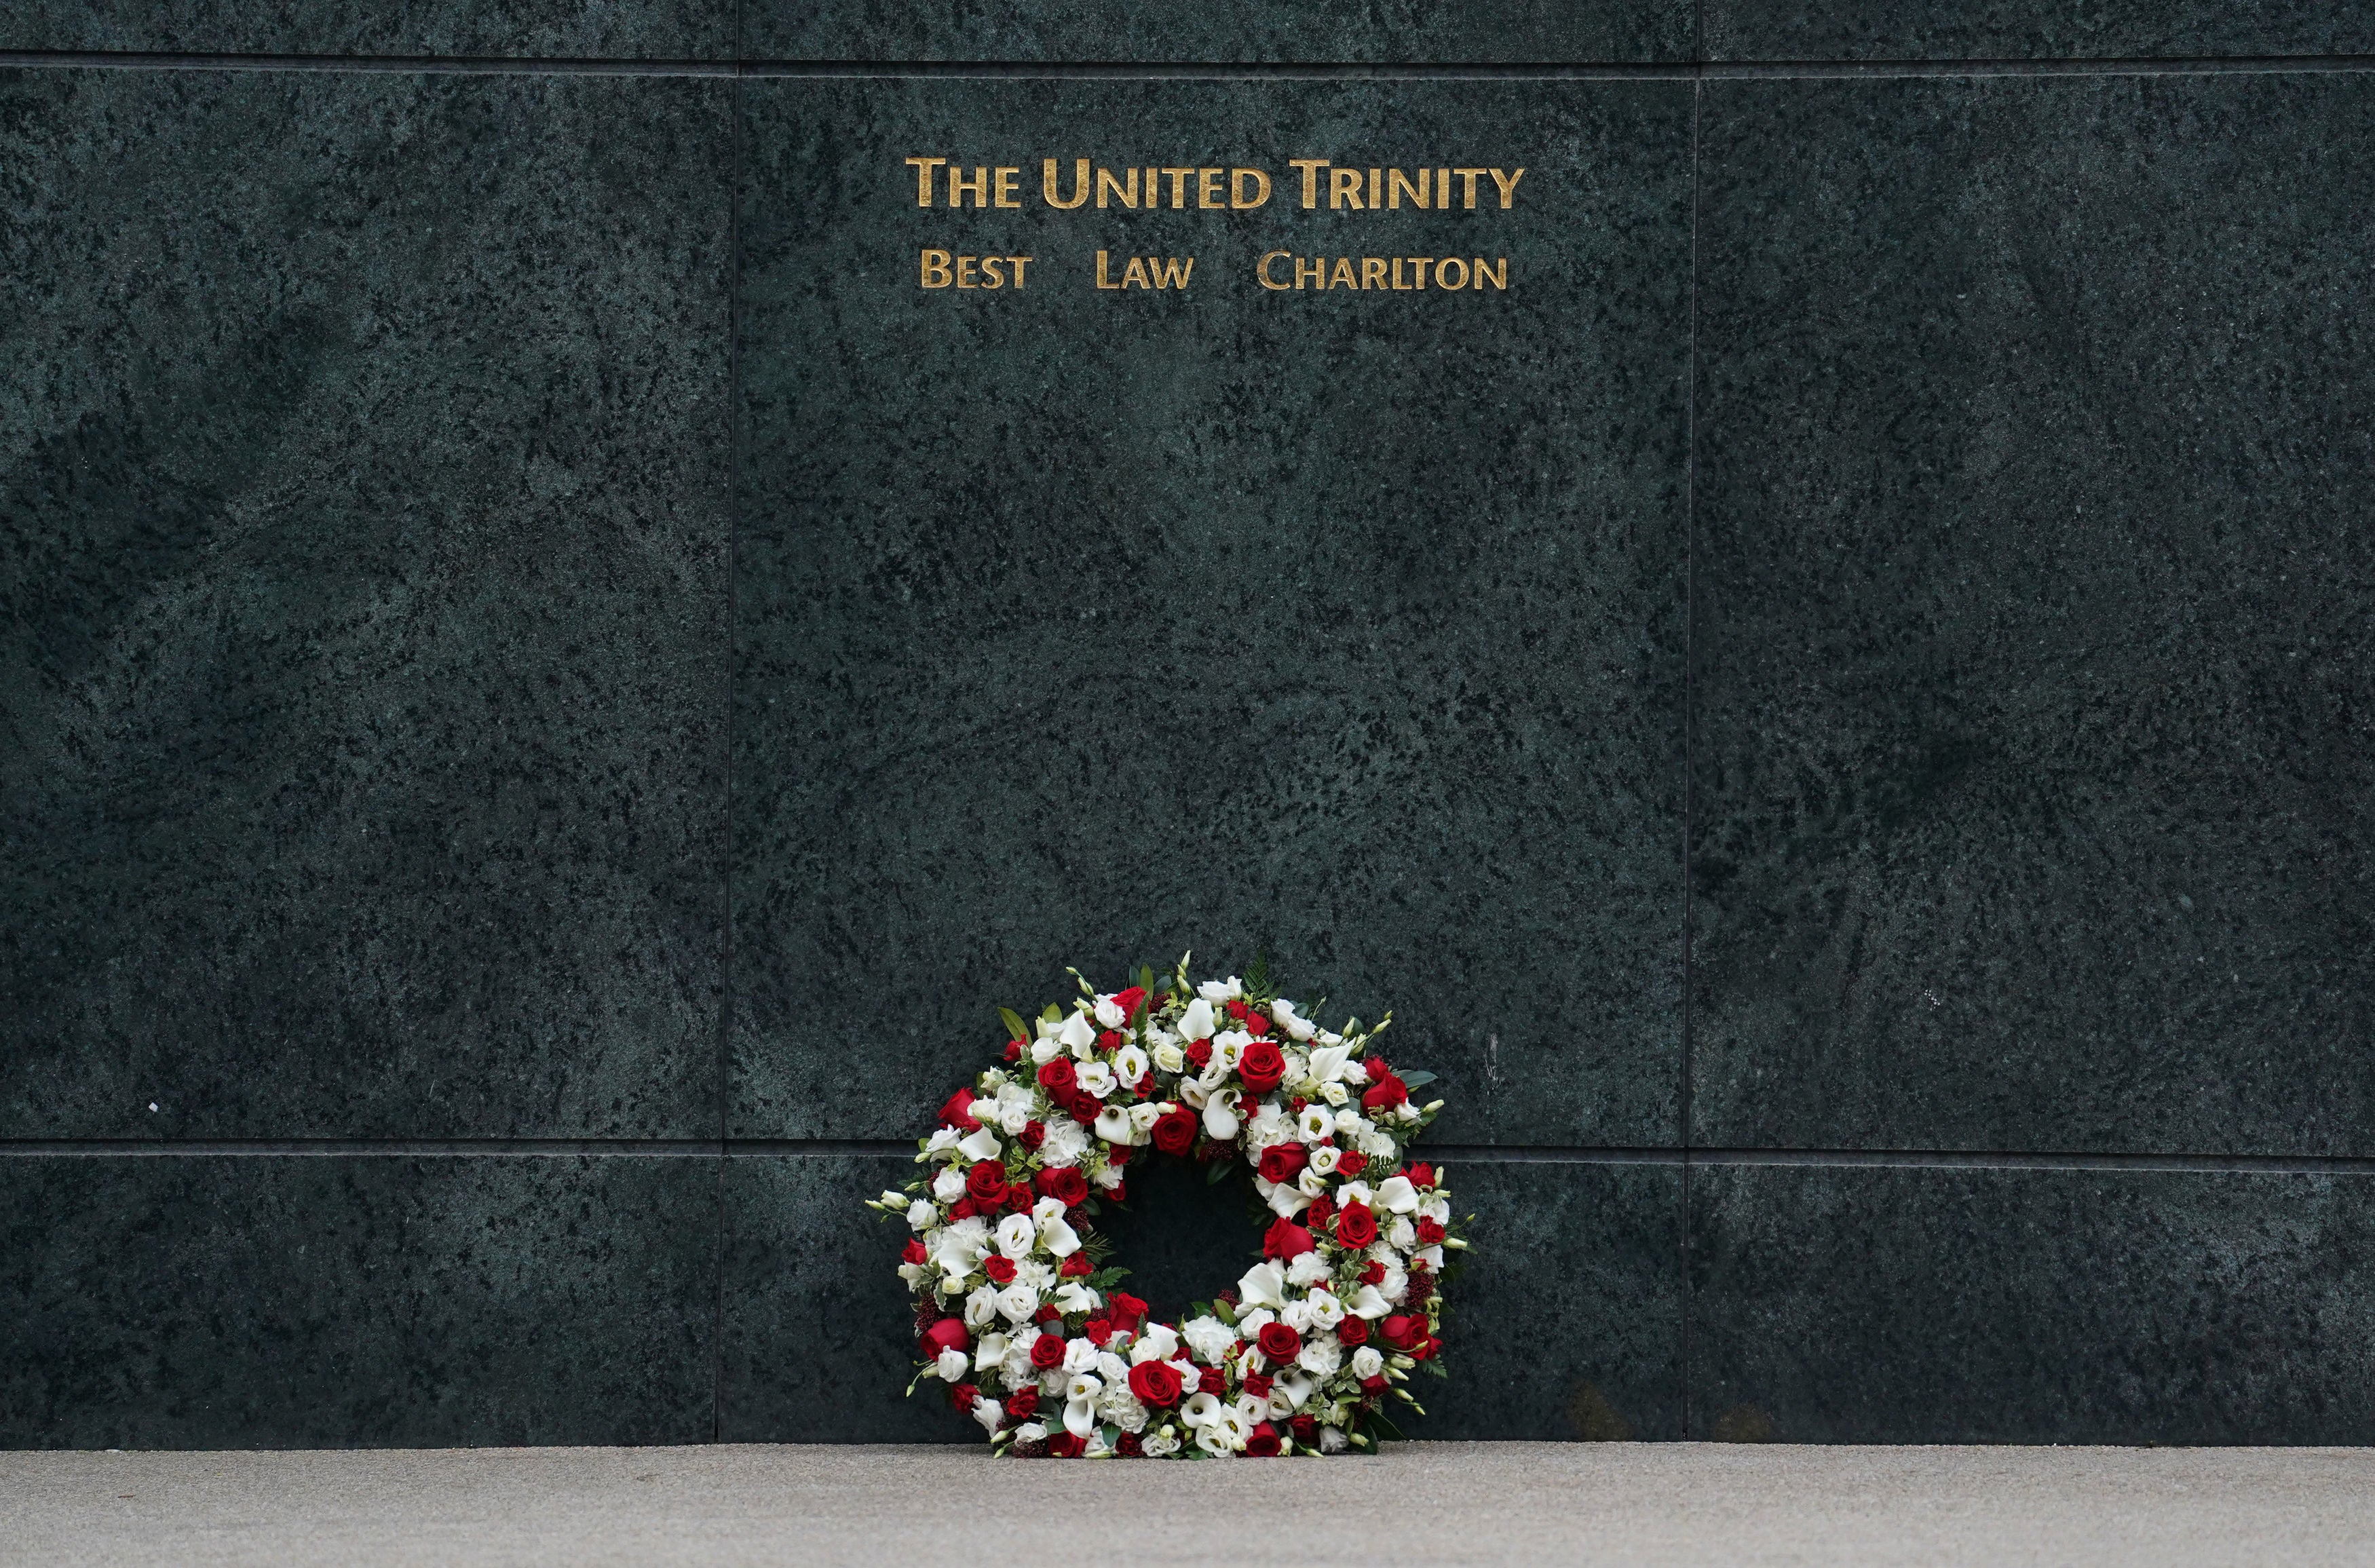 A wreath lies against the United Trinity statue